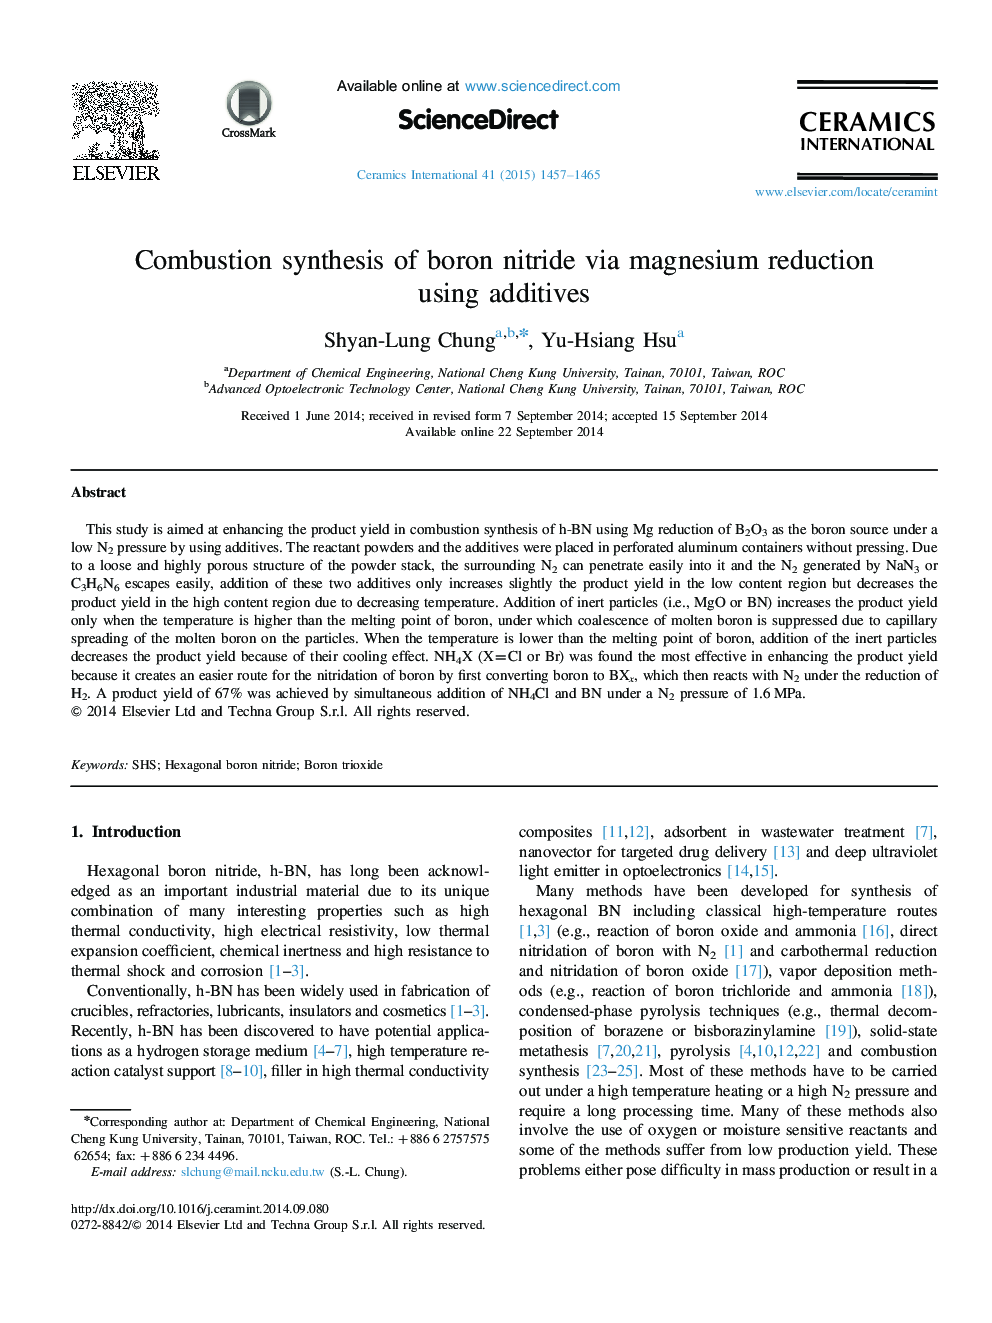 Combustion synthesis of boron nitride via magnesium reduction using additives